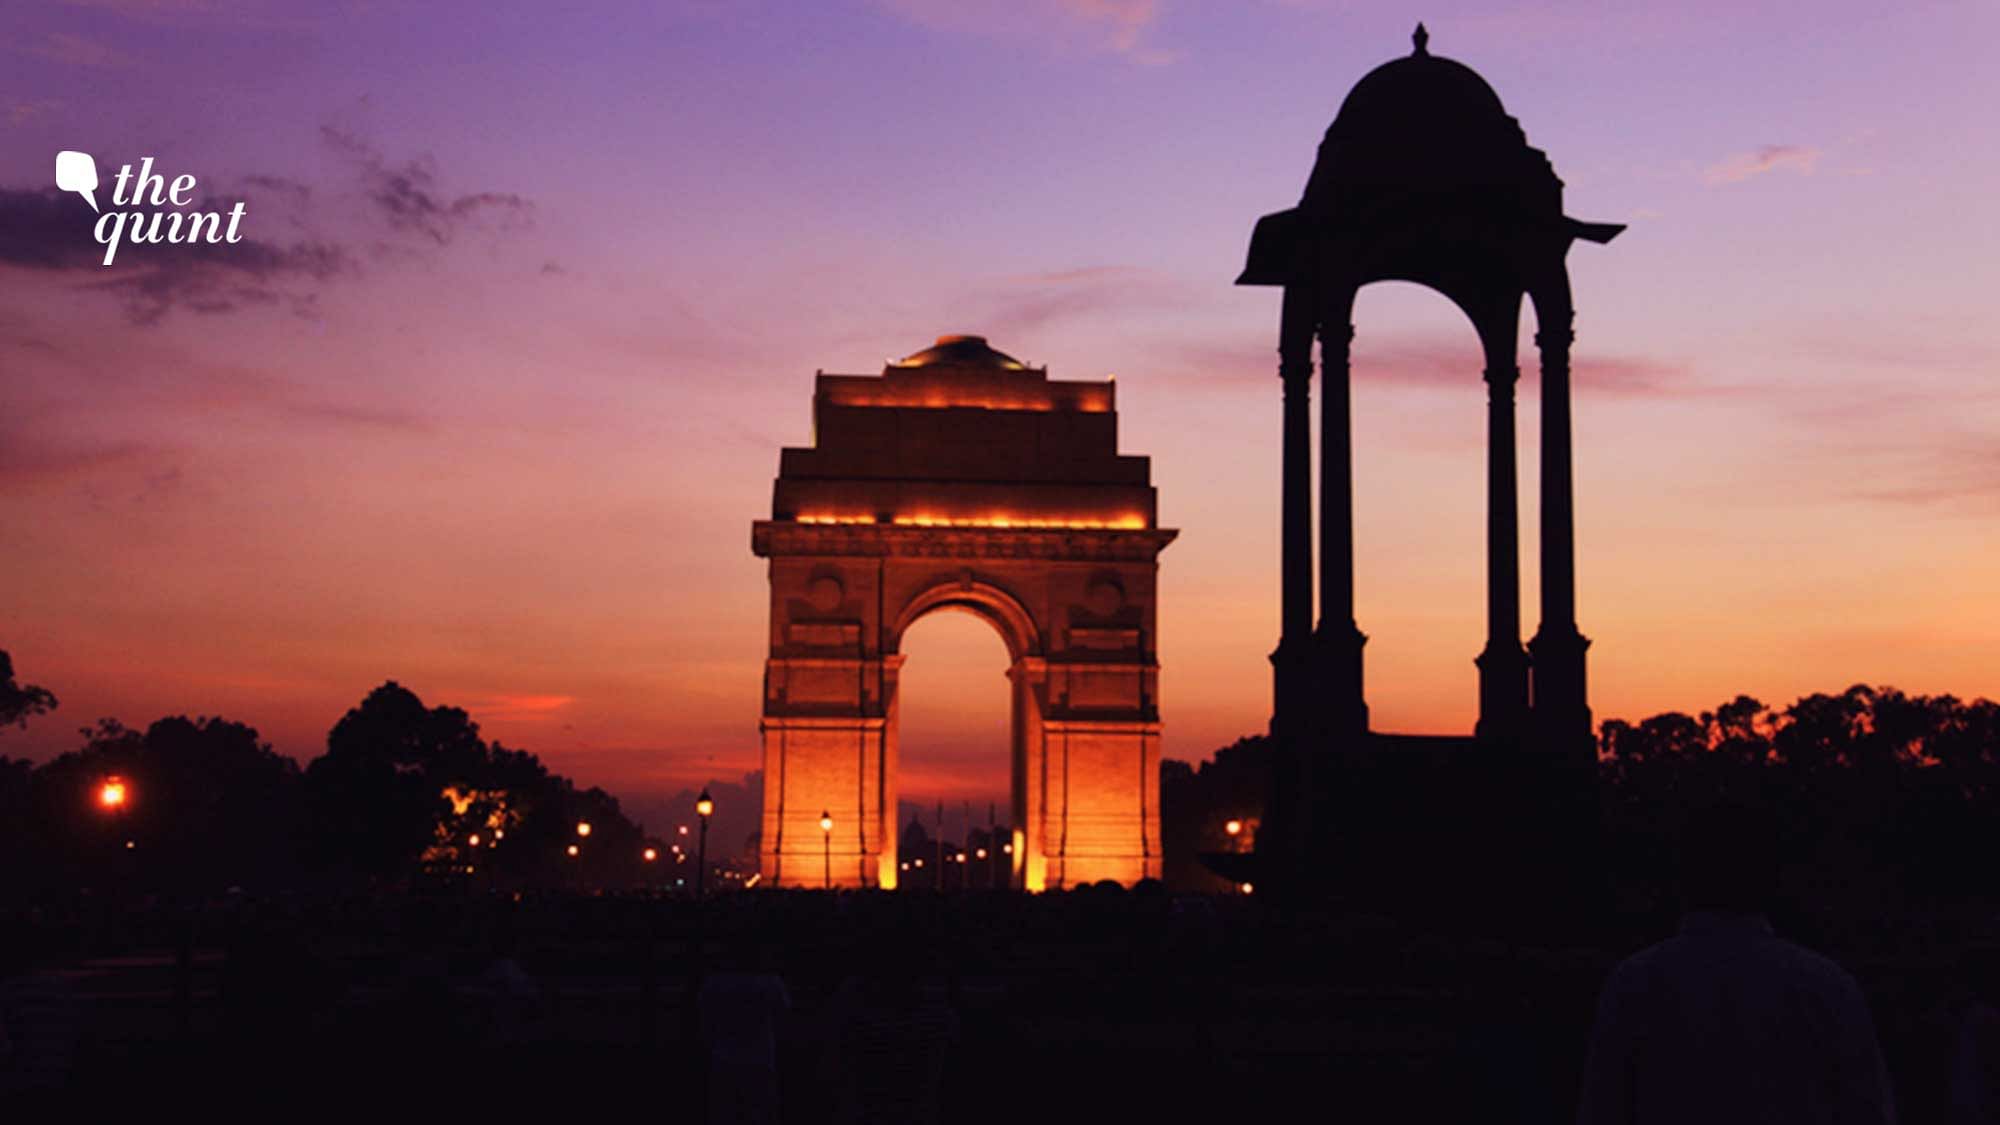 Image of India Gate, New Delhi, used for representational purposes.